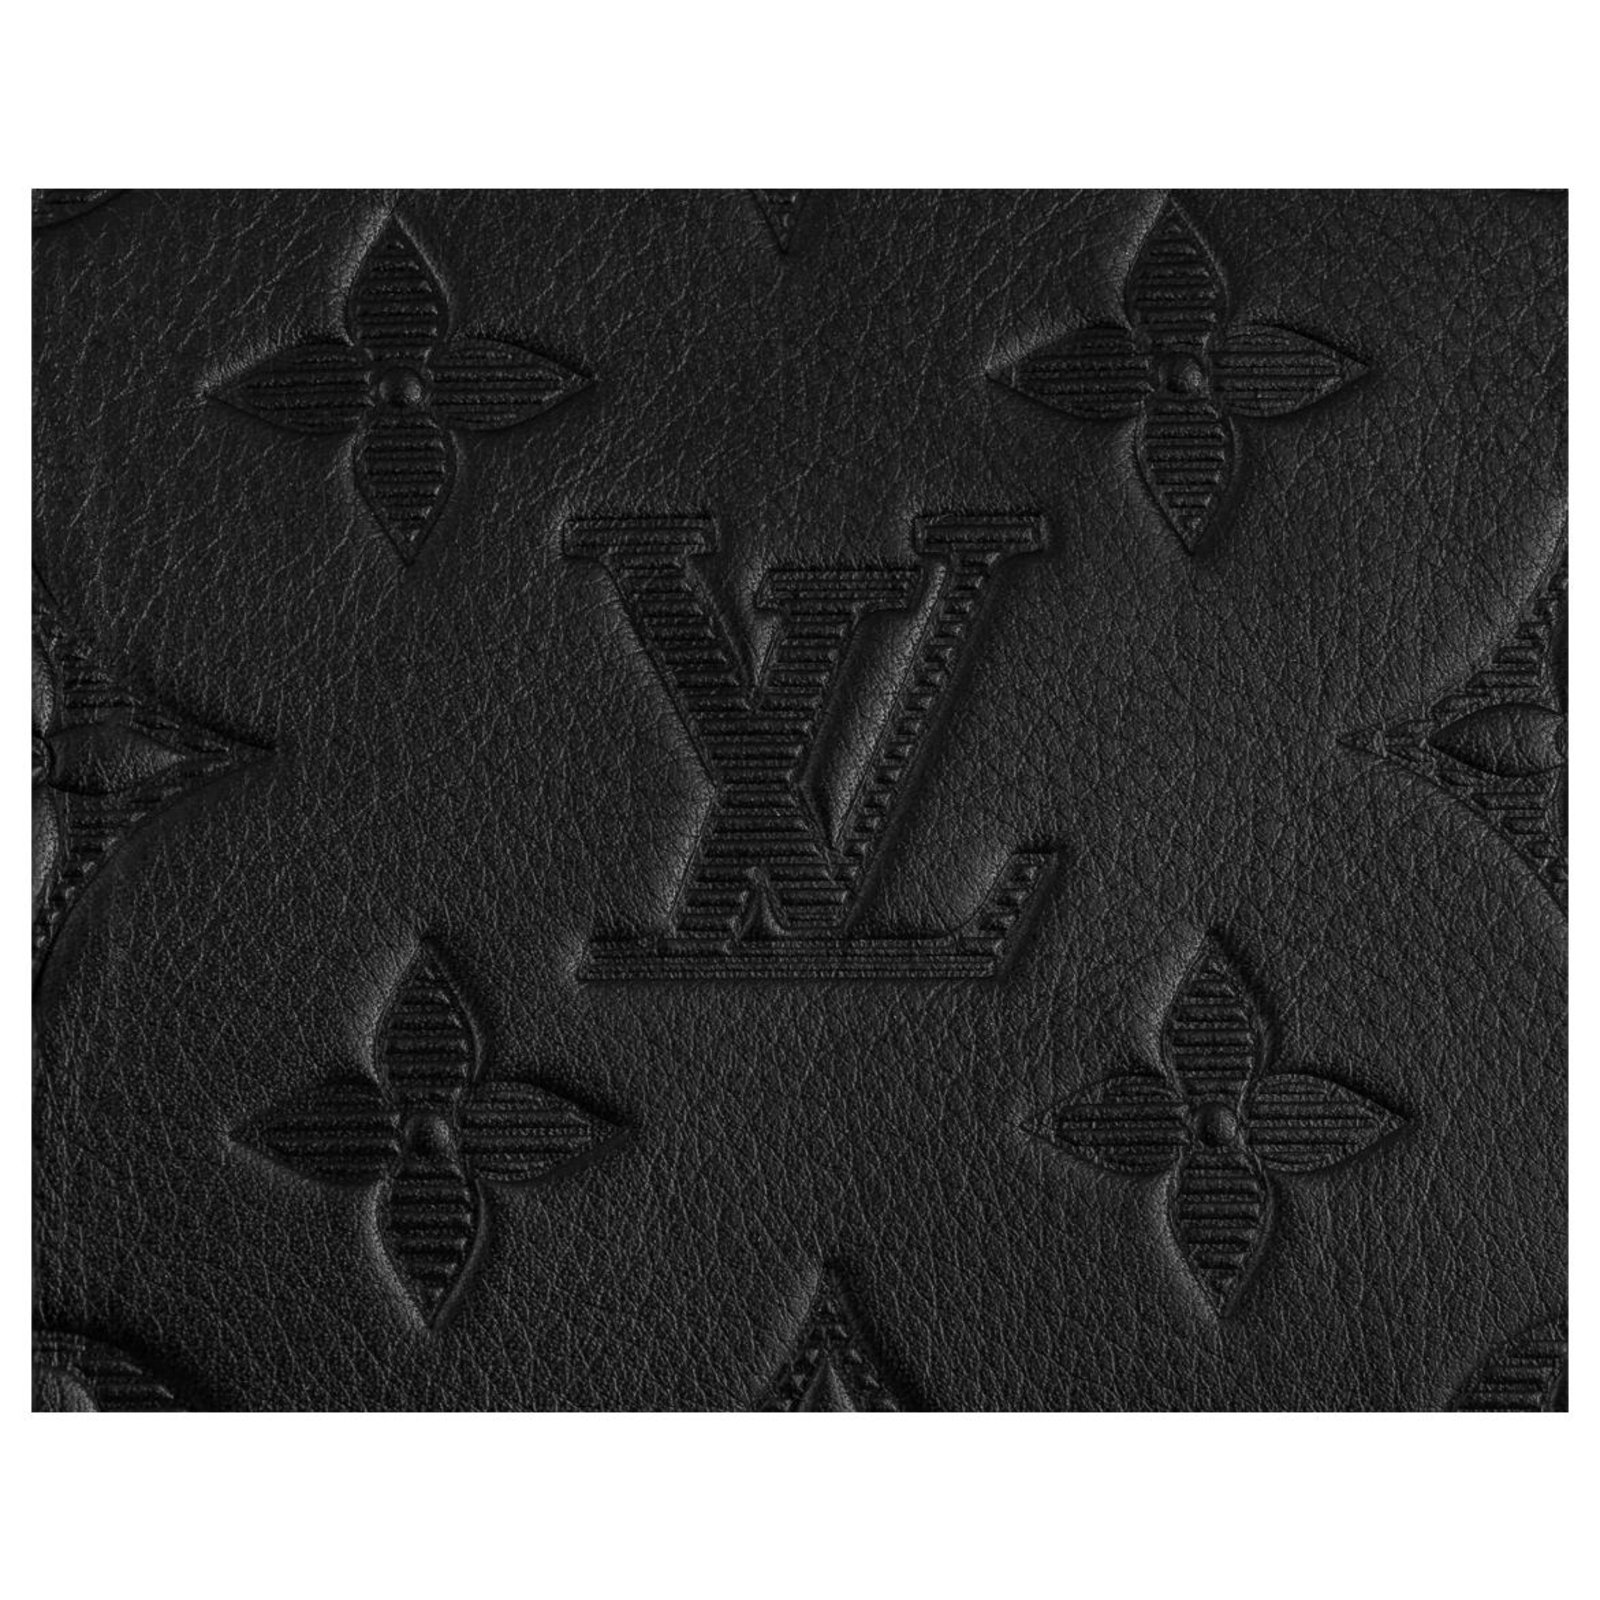 Louis Vuitton Keepall Bandouliere 50 Monogram Shadow Black in